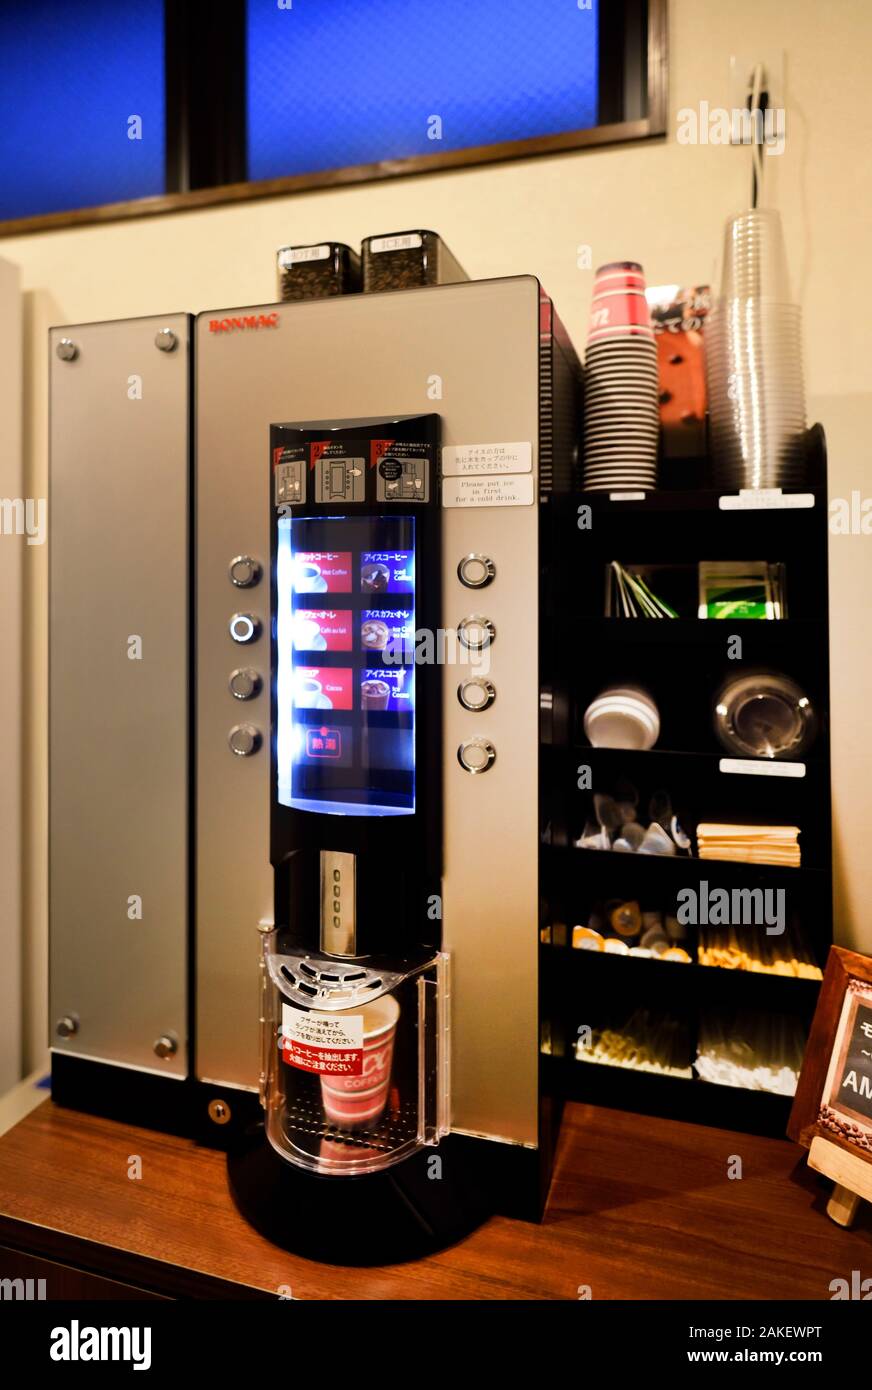 https://c8.alamy.com/comp/2AKEWPT/coffee-machine-japan-2AKEWPT.jpg